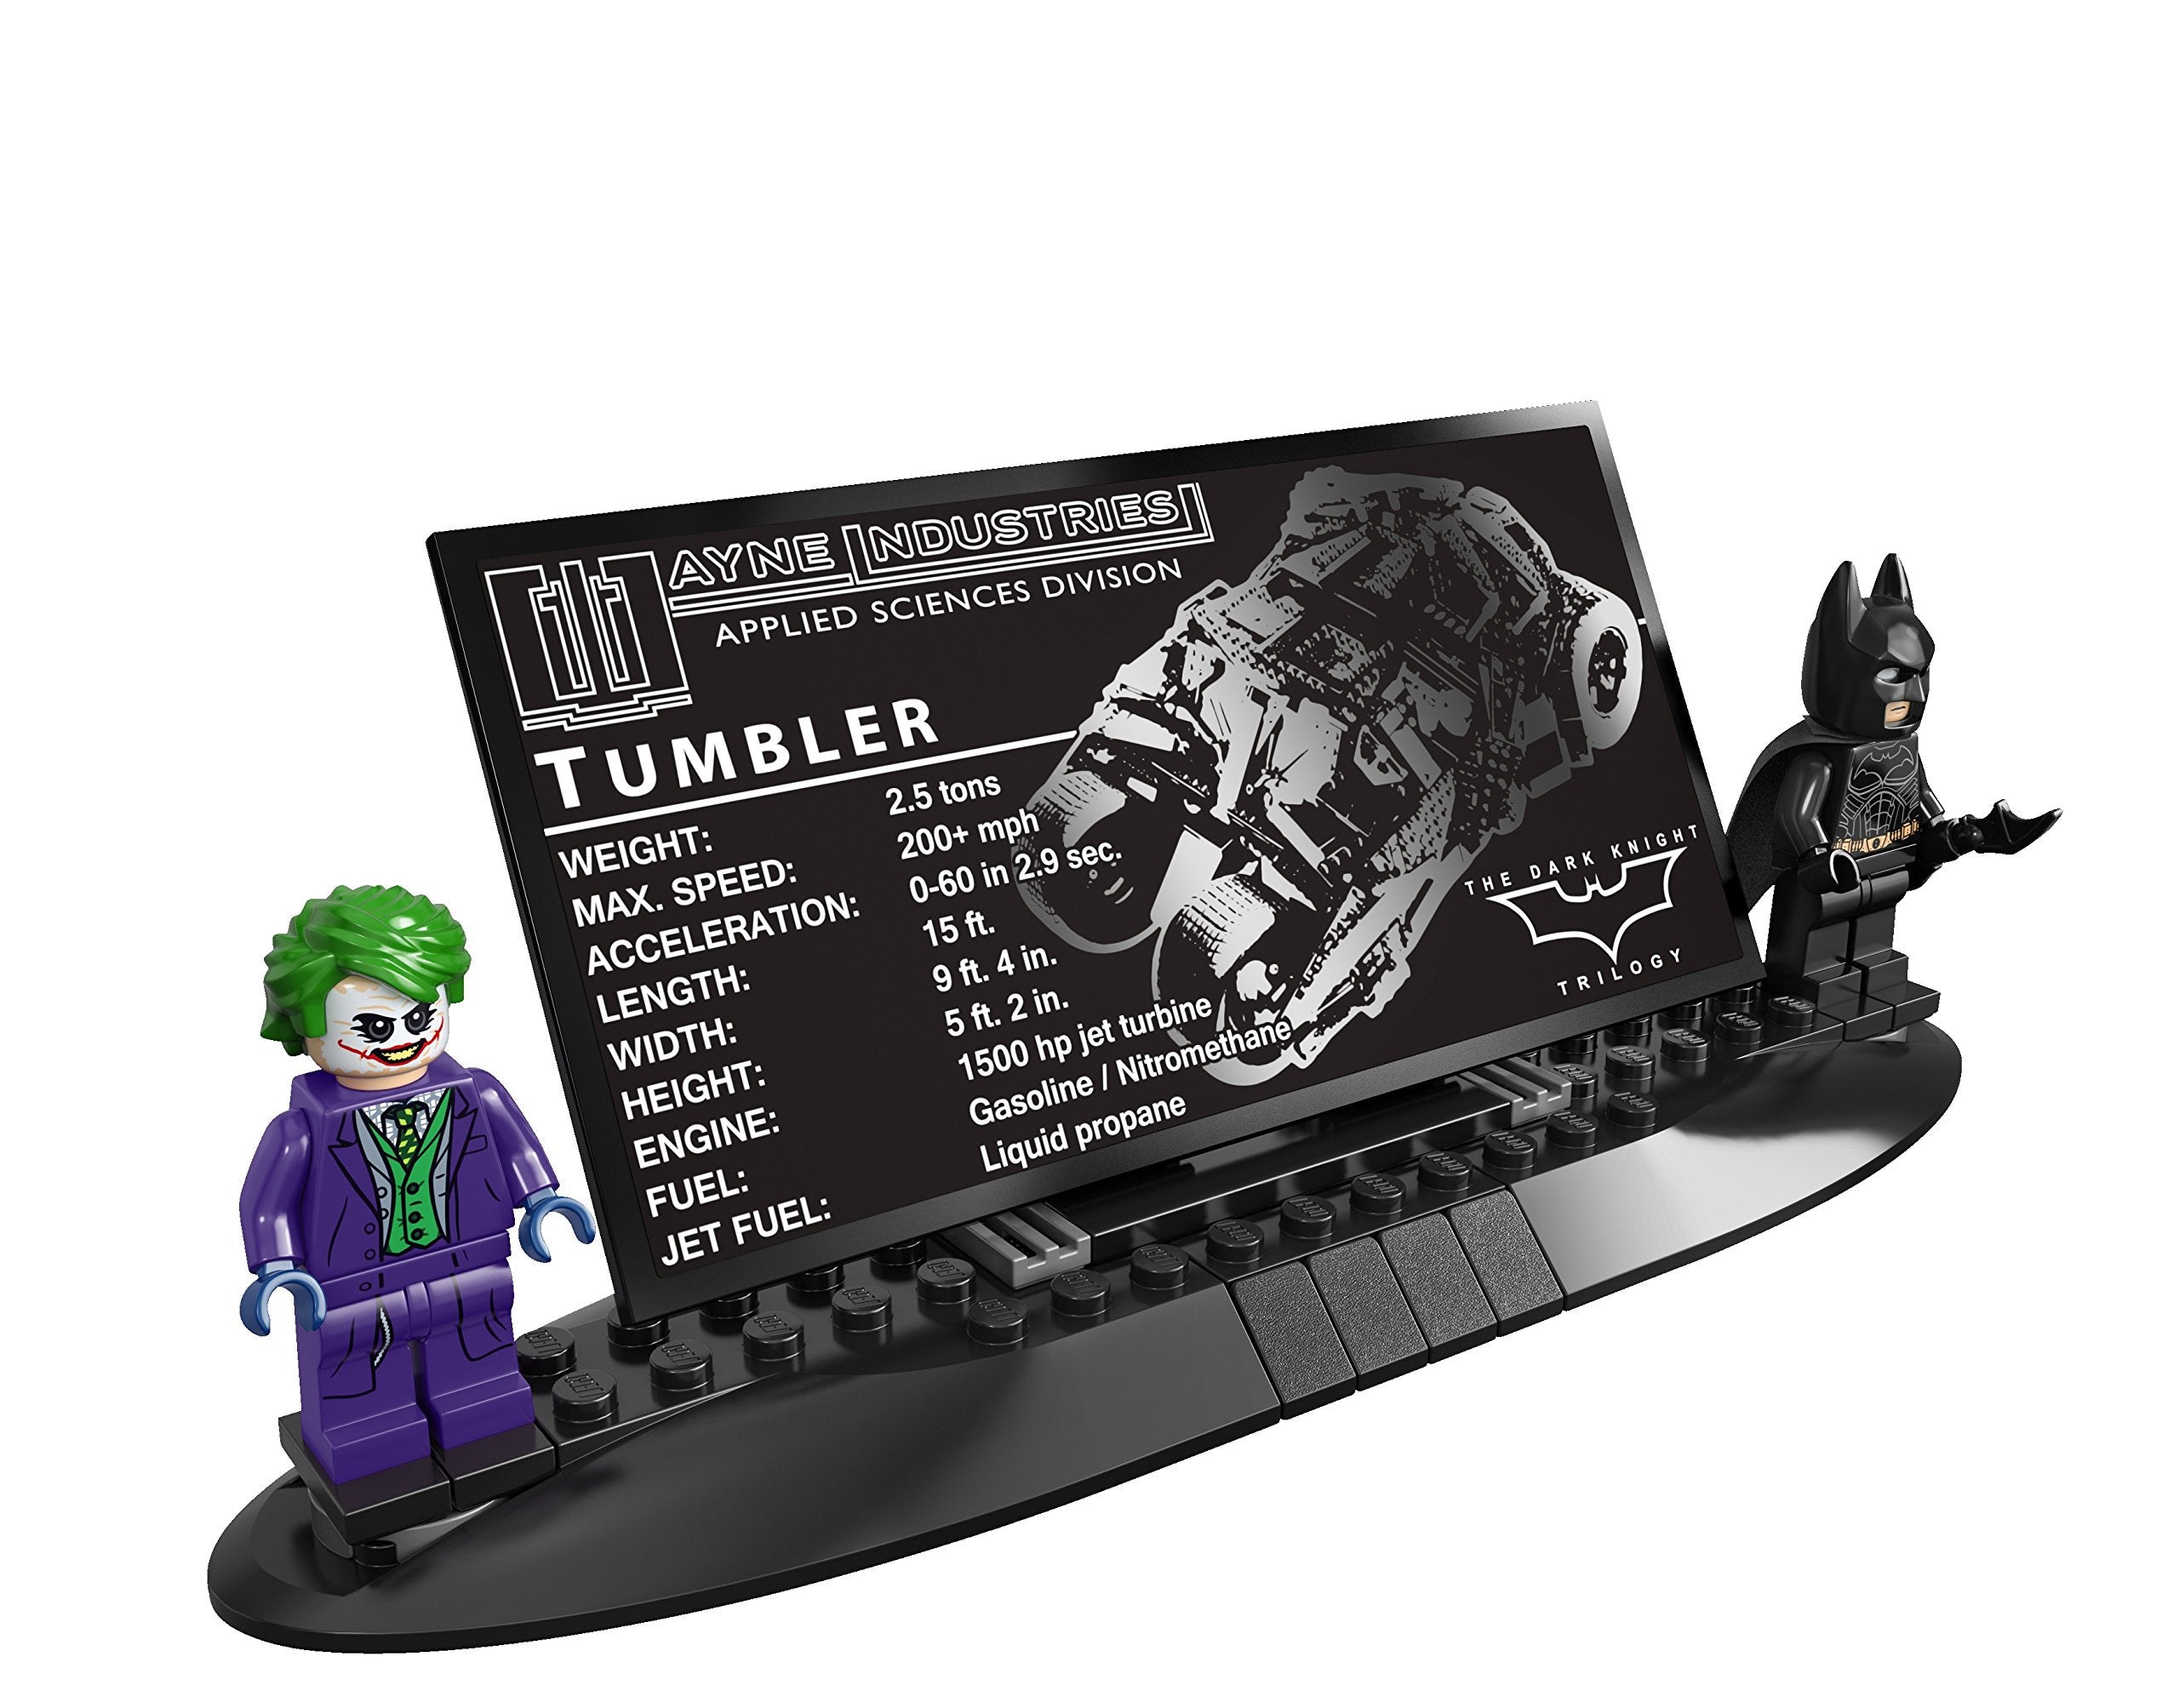 LEGO Superheroes 76023 The Tumbler